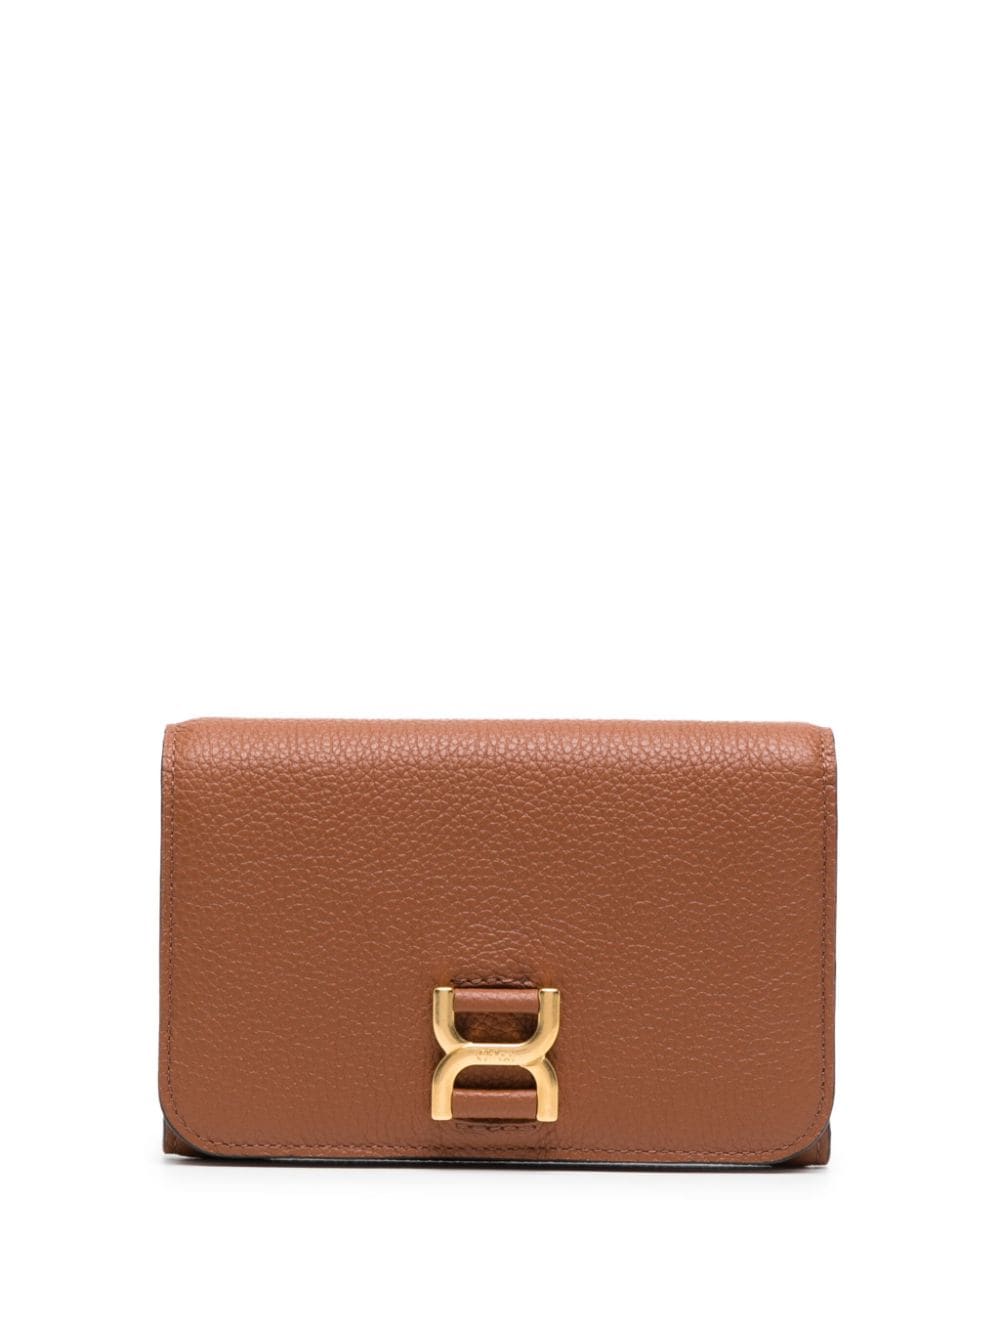 Chloé Marcie leather wallet - Brown von Chloé